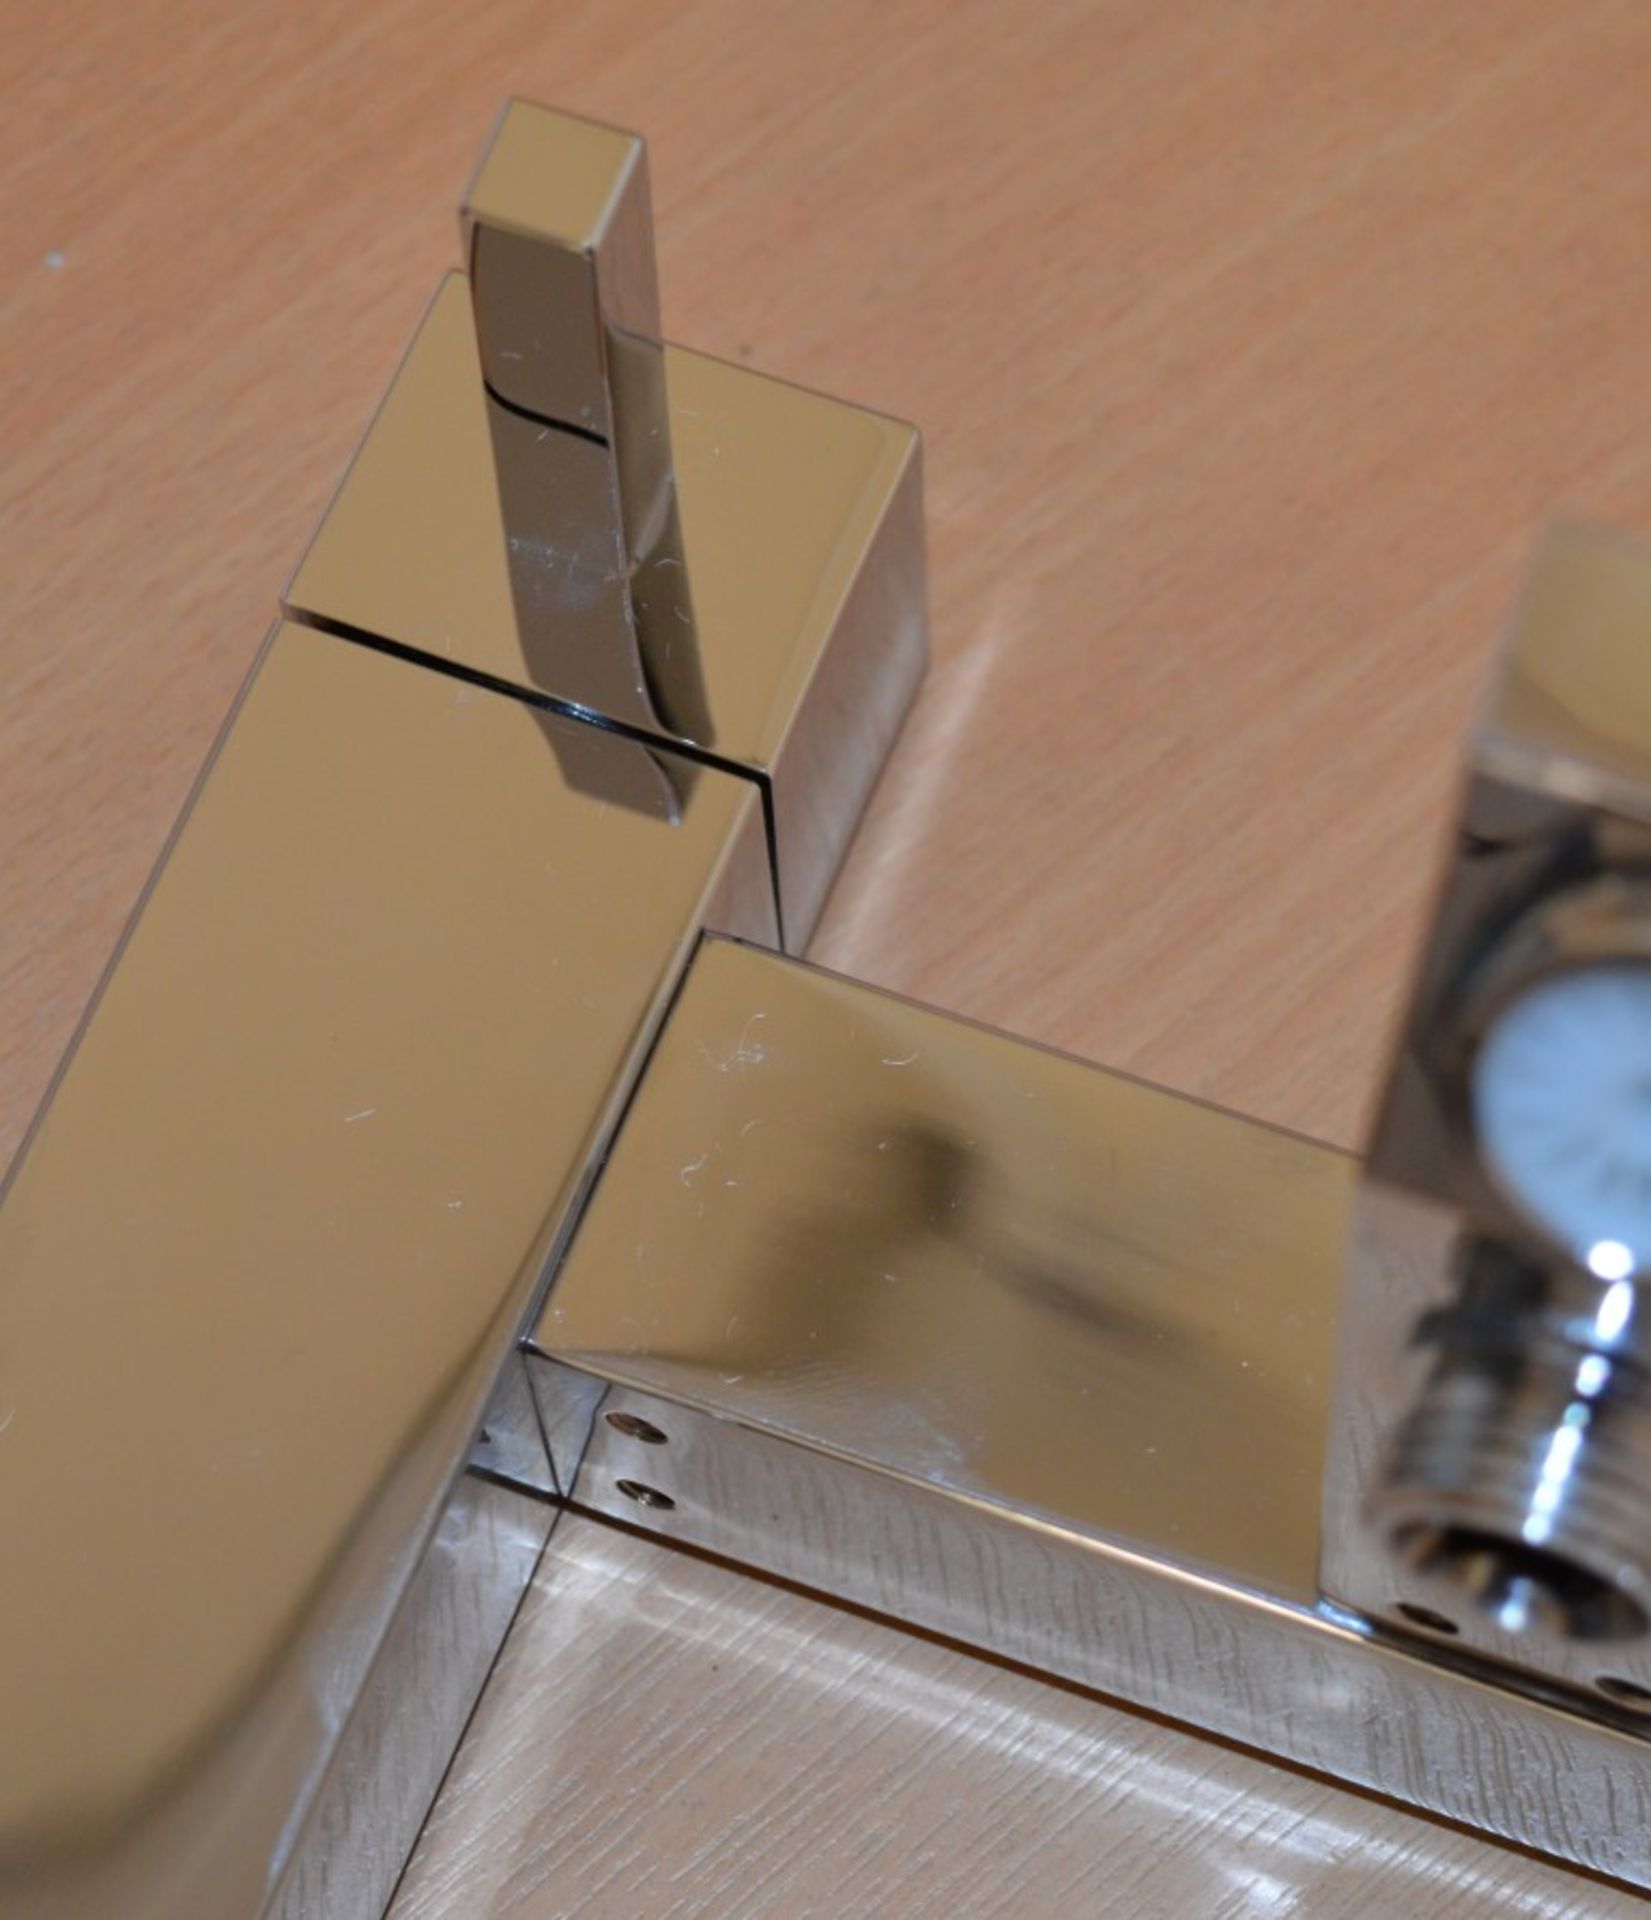 1 x Verona Deck Bath Shower Mixer Tap - Vogue Bathrooms - Modern Bath Mixer Tap in Bright Chrome - Image 14 of 16